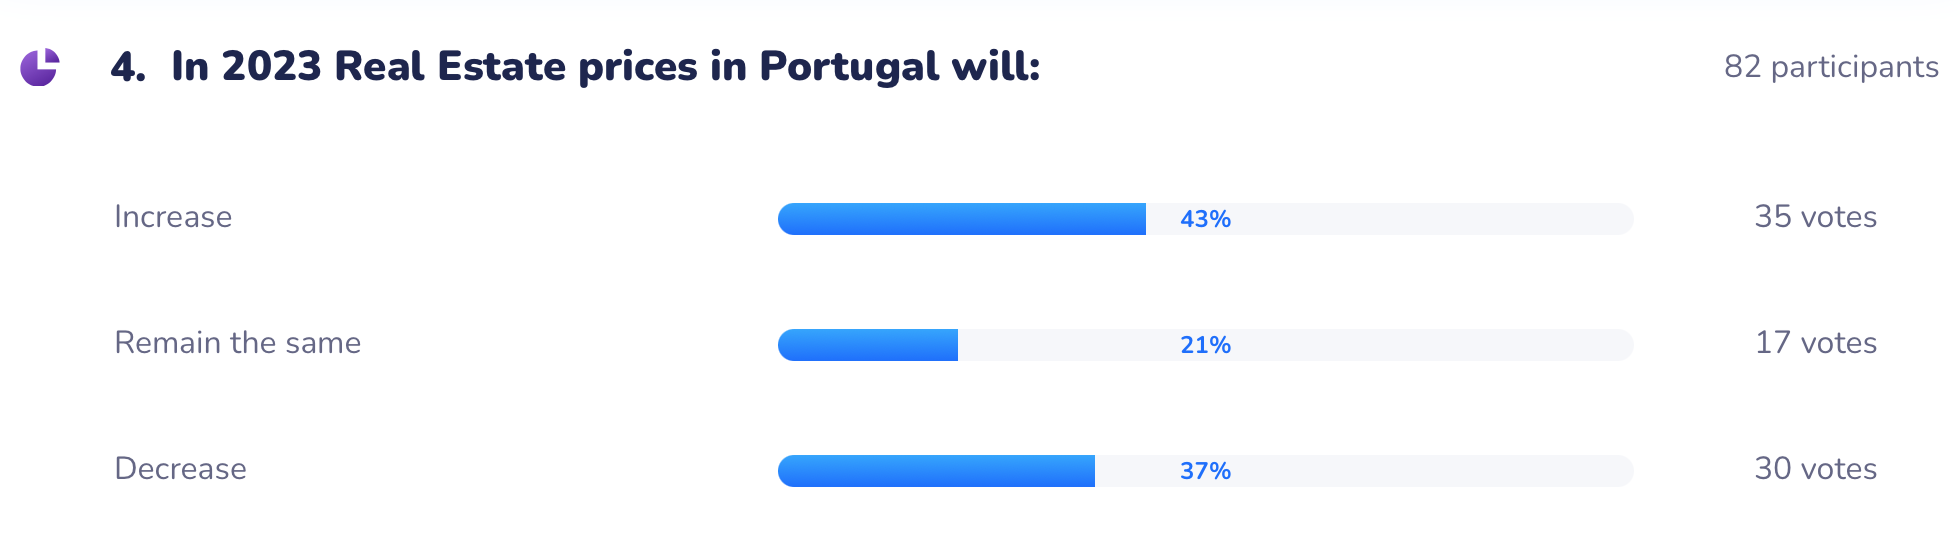 PORTUGAL REAL ESTATE QUIZ | QUESTION 4 | 82 PARTICIPANTS